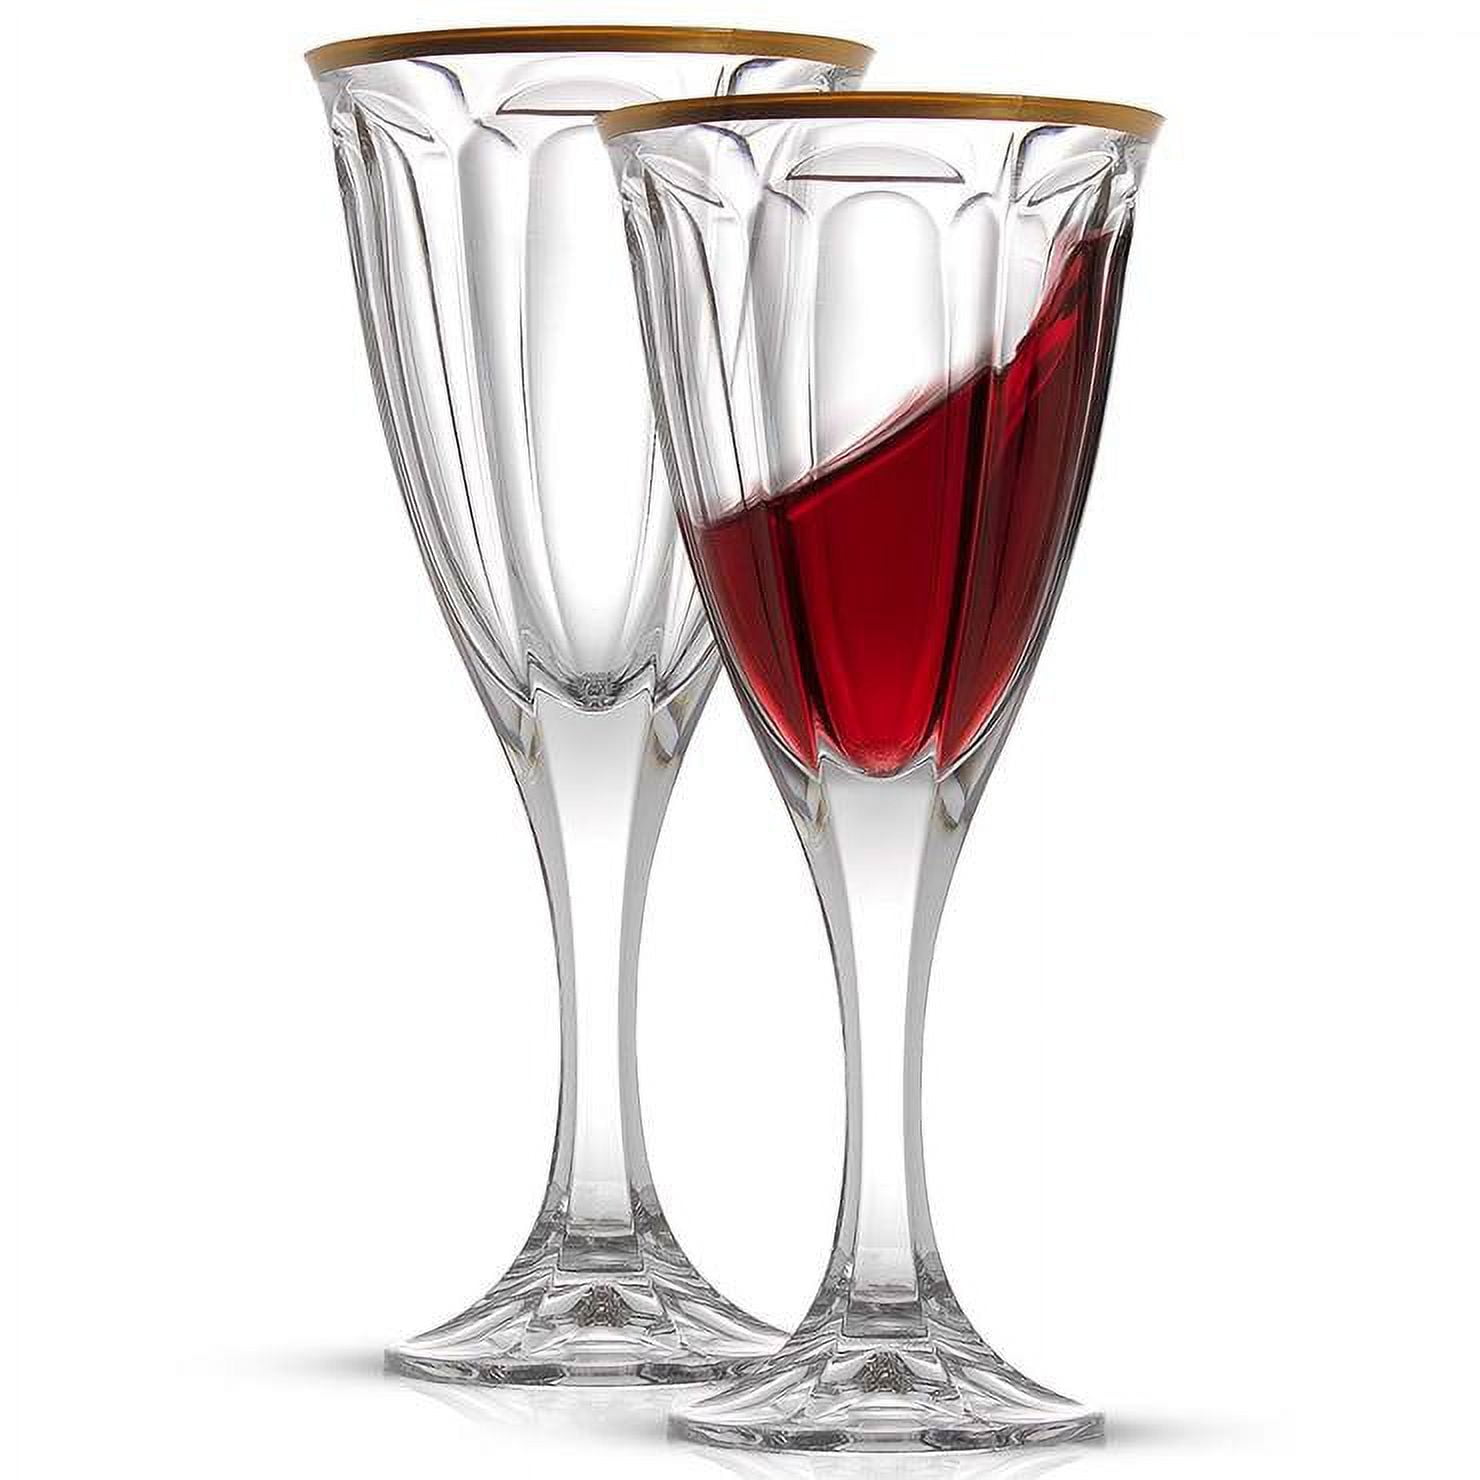 JoyJolt Claire European Crystal Unique Red Wine Glasses 14 oz, Set of 2 New